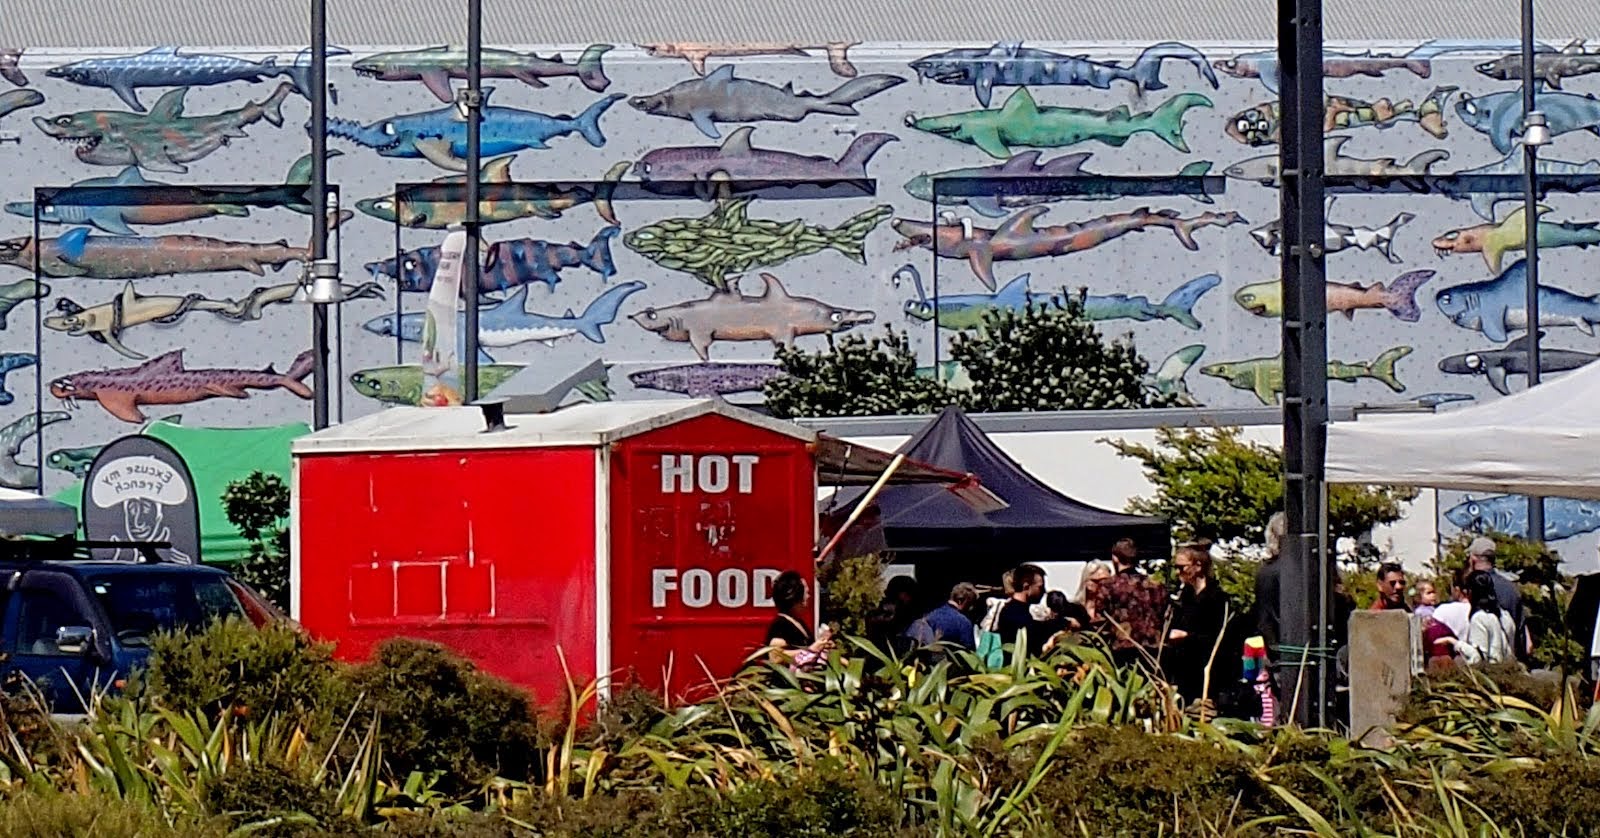 Chaffers Dock Sunday market with shark backdrop